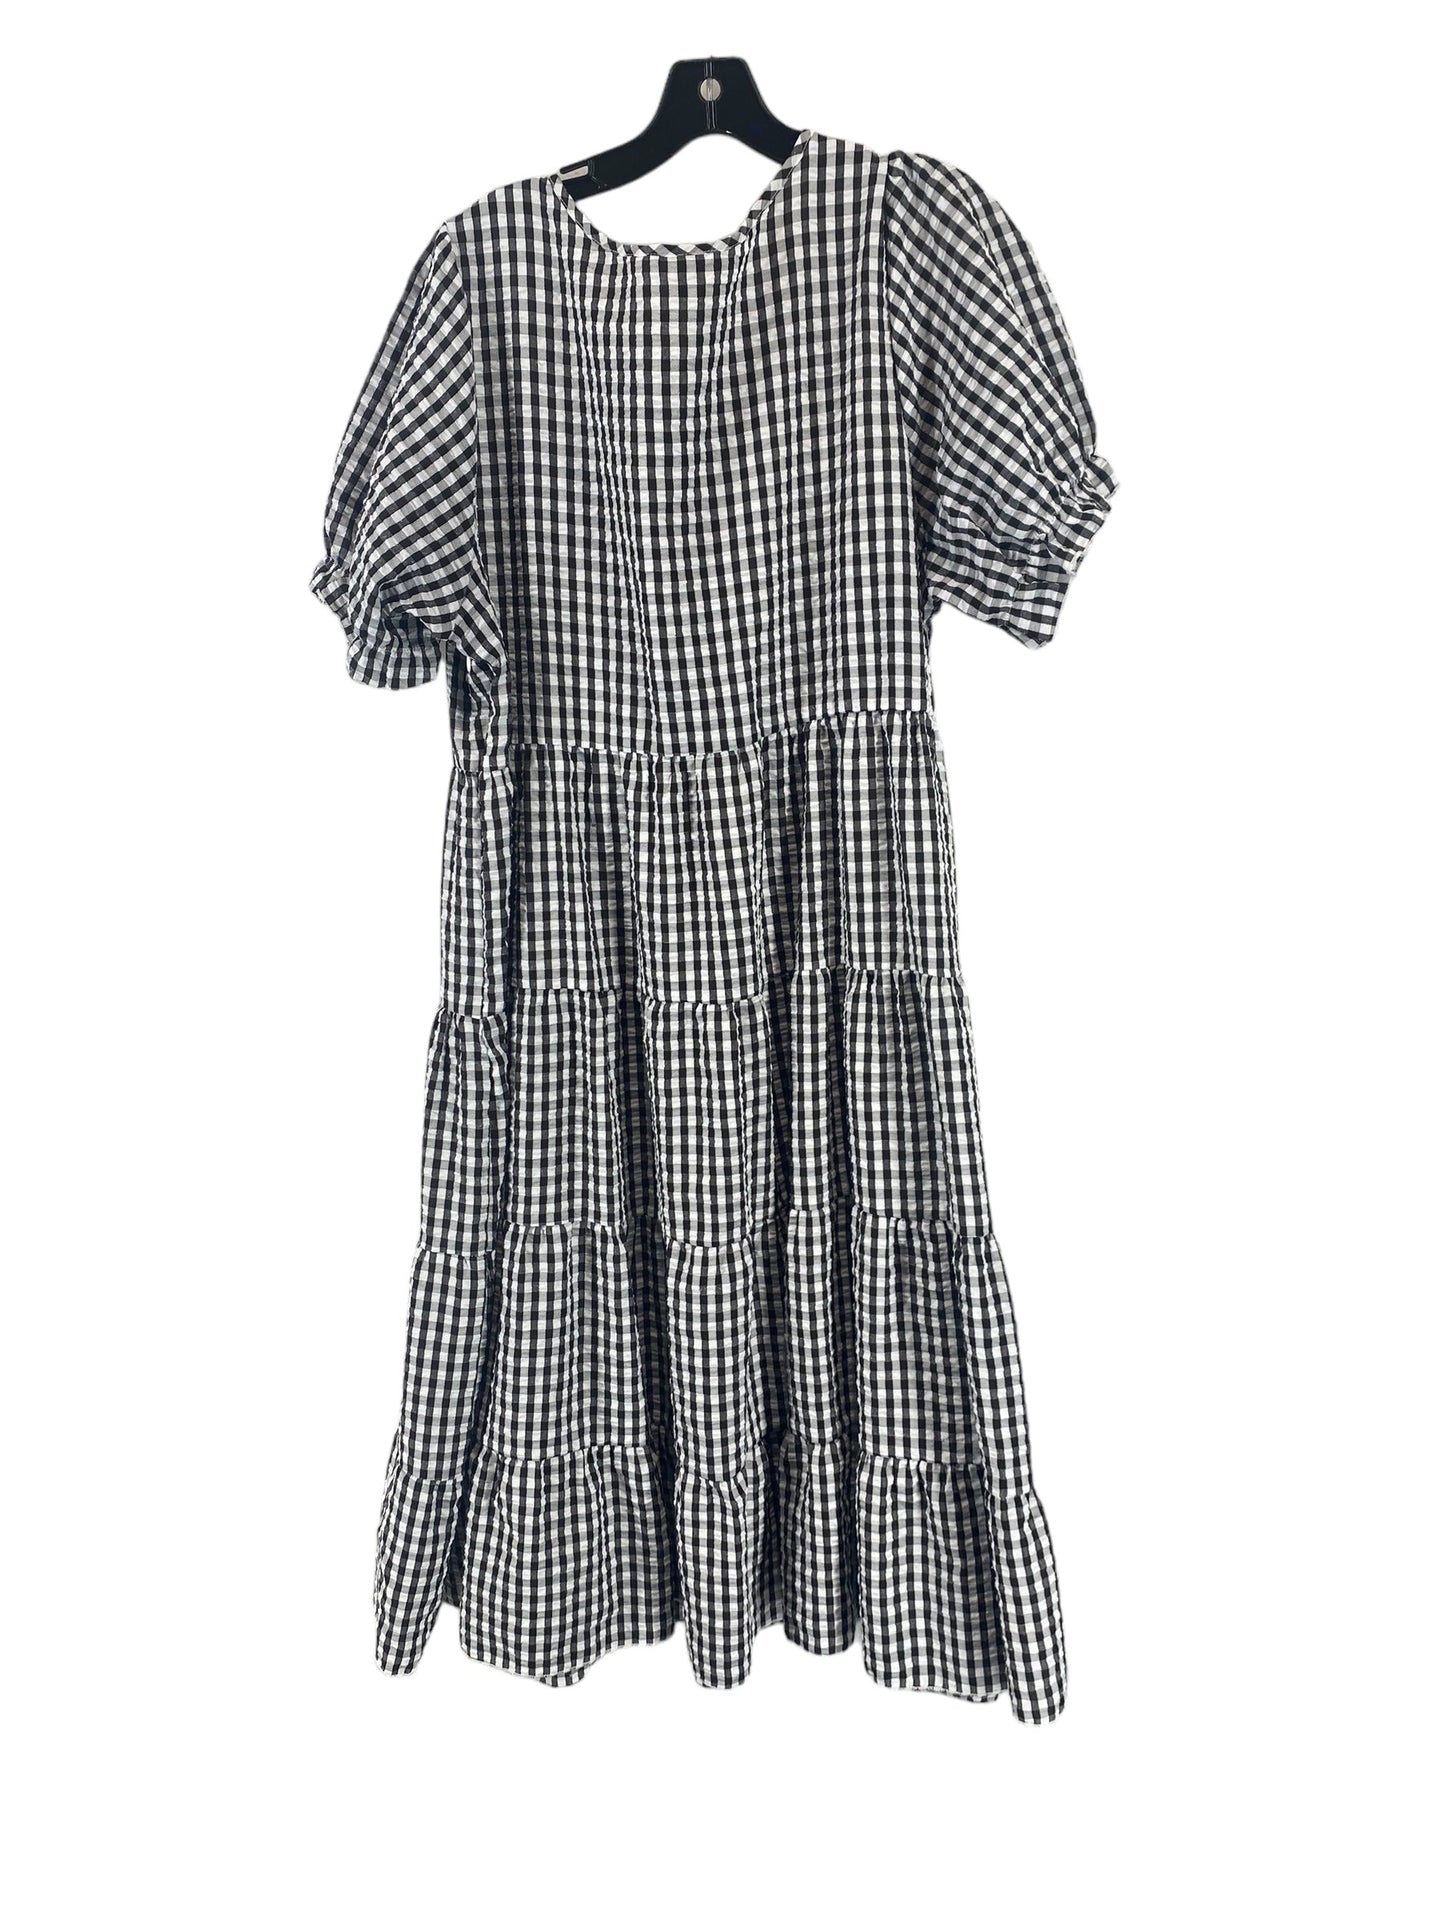 Plaid Pattern Dress Casual Maxi Shein, Size 3x